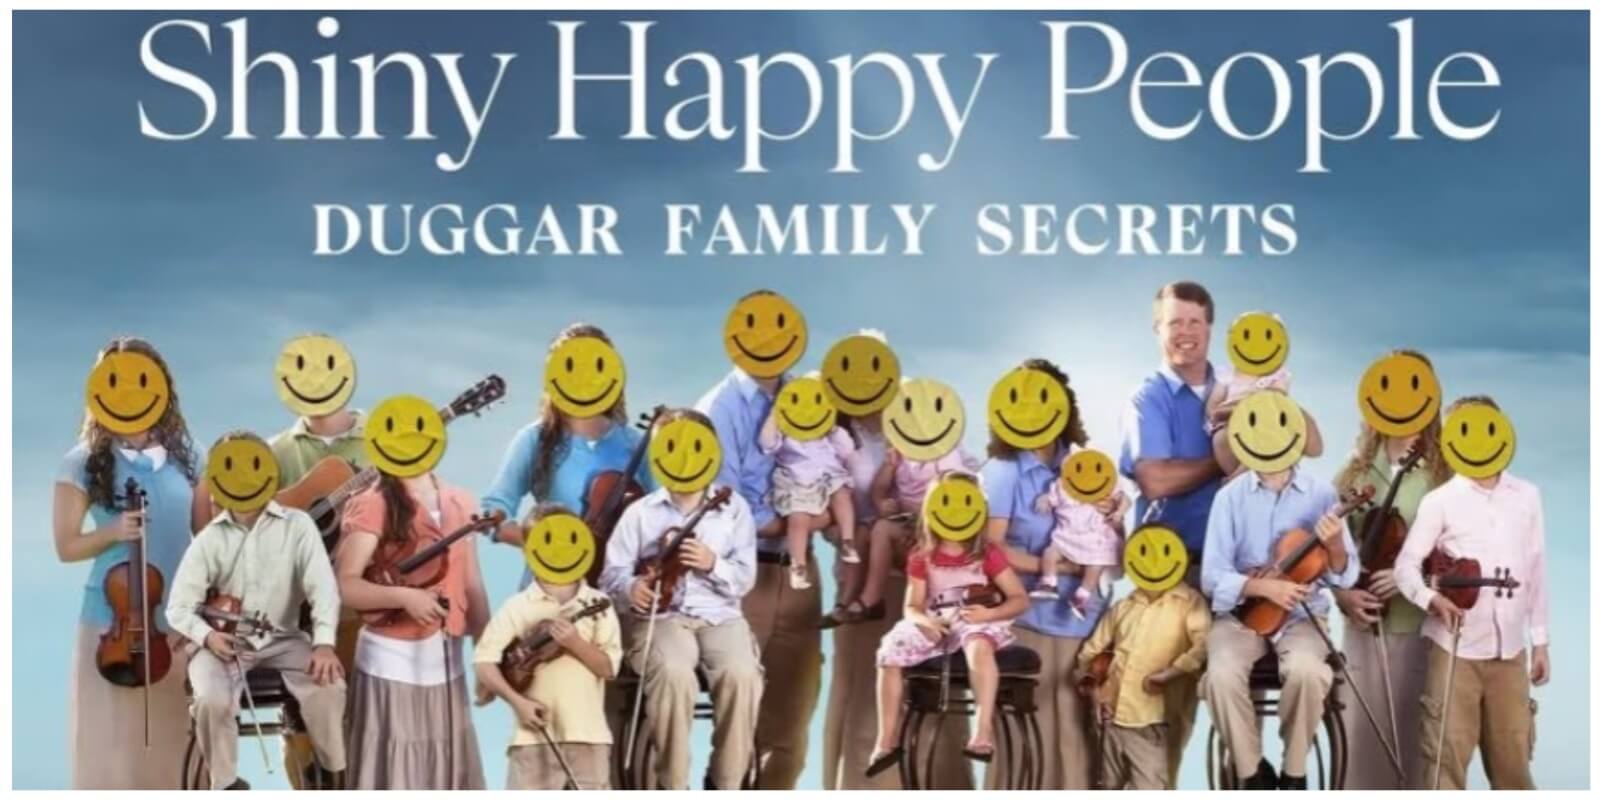 Jim Holt fa la stessa battuta di Josh Duggar in "Shiny Happy People: Duggar Family Secrets"